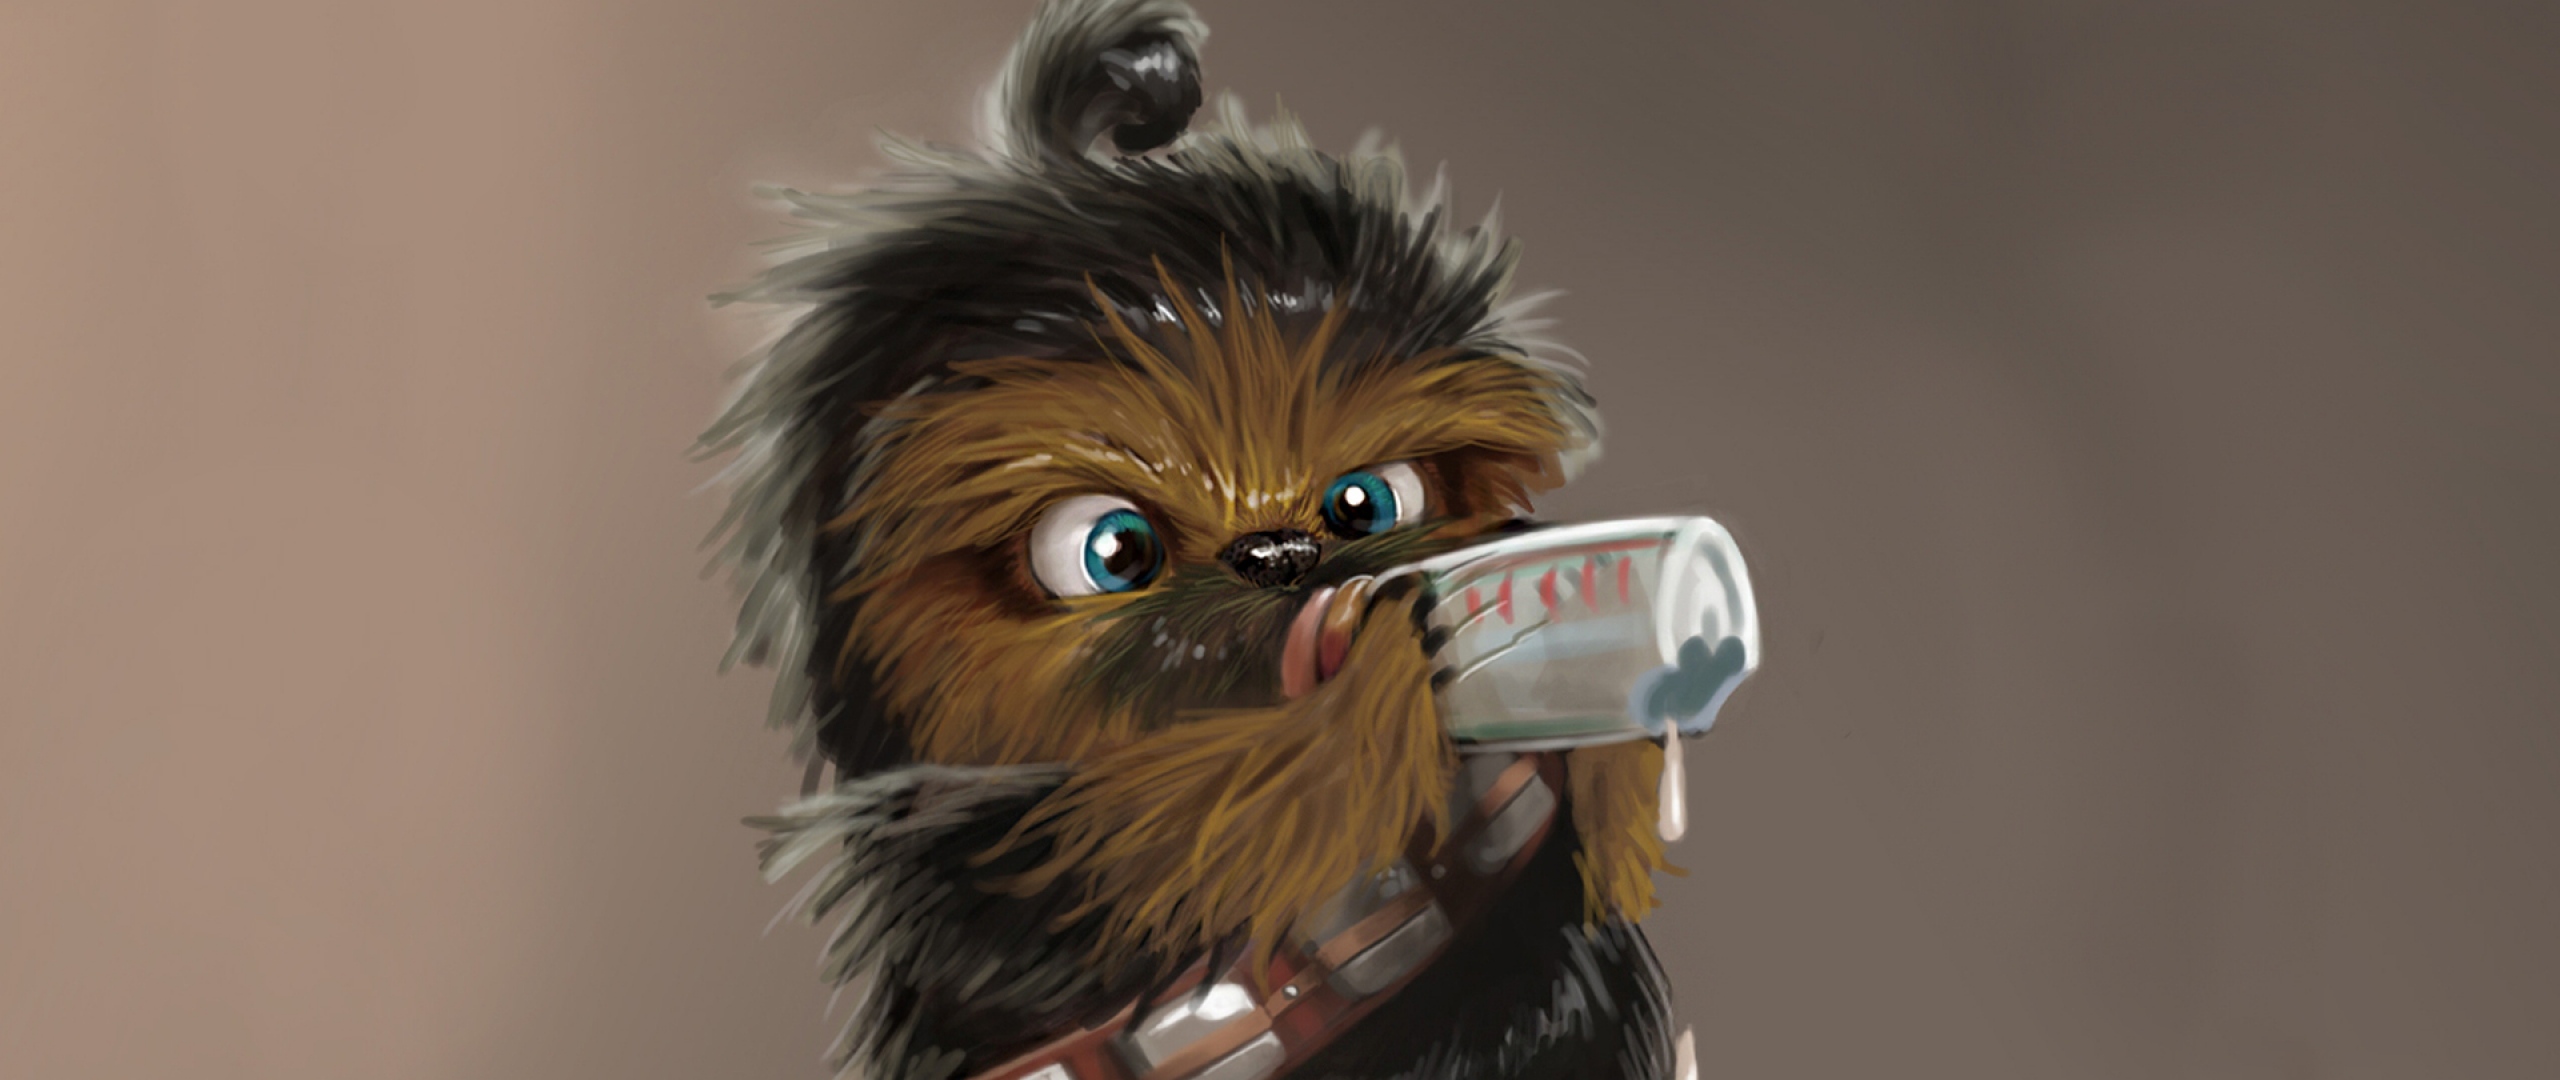 Wallpaper Star Wars Chewbacca Drink Baby